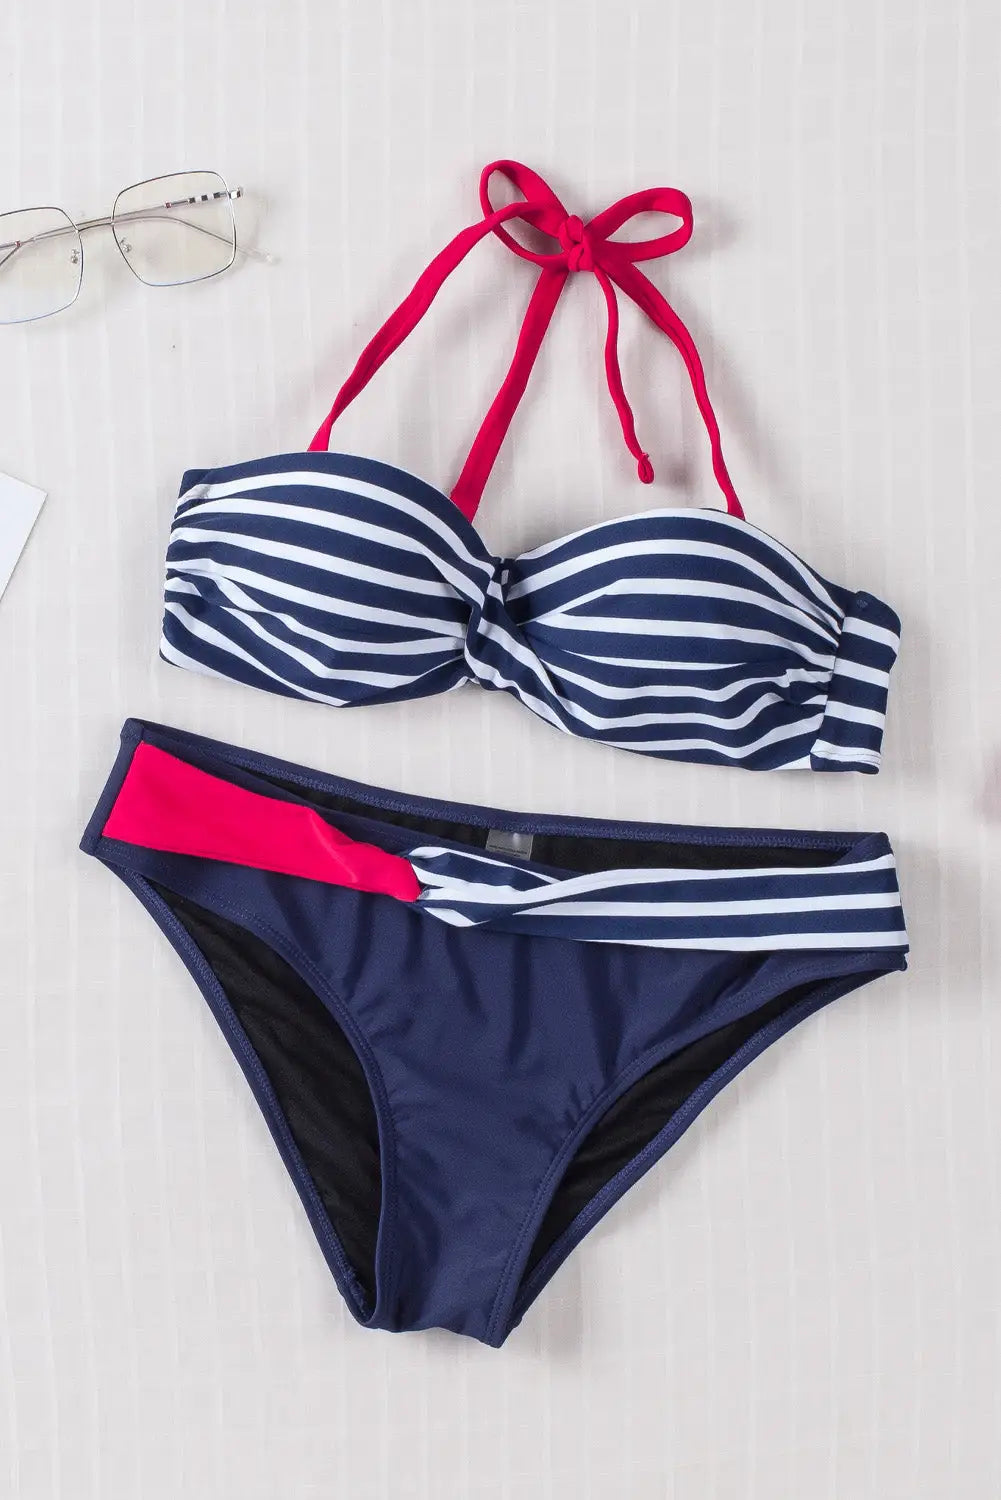 Blue halter bandeau striped bikini - bikinis